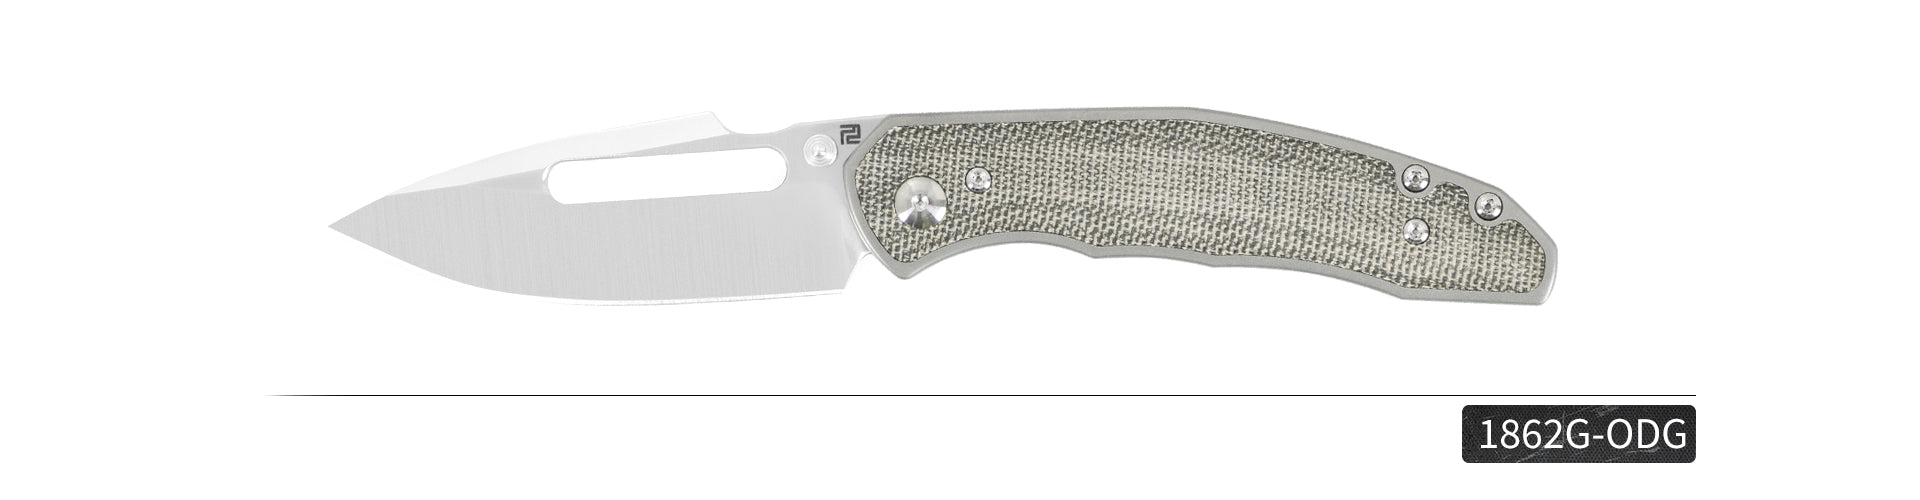 Leatherman Skeletool Mini Utility Knife Blade (9ED8FEY4J) by Metropolicity